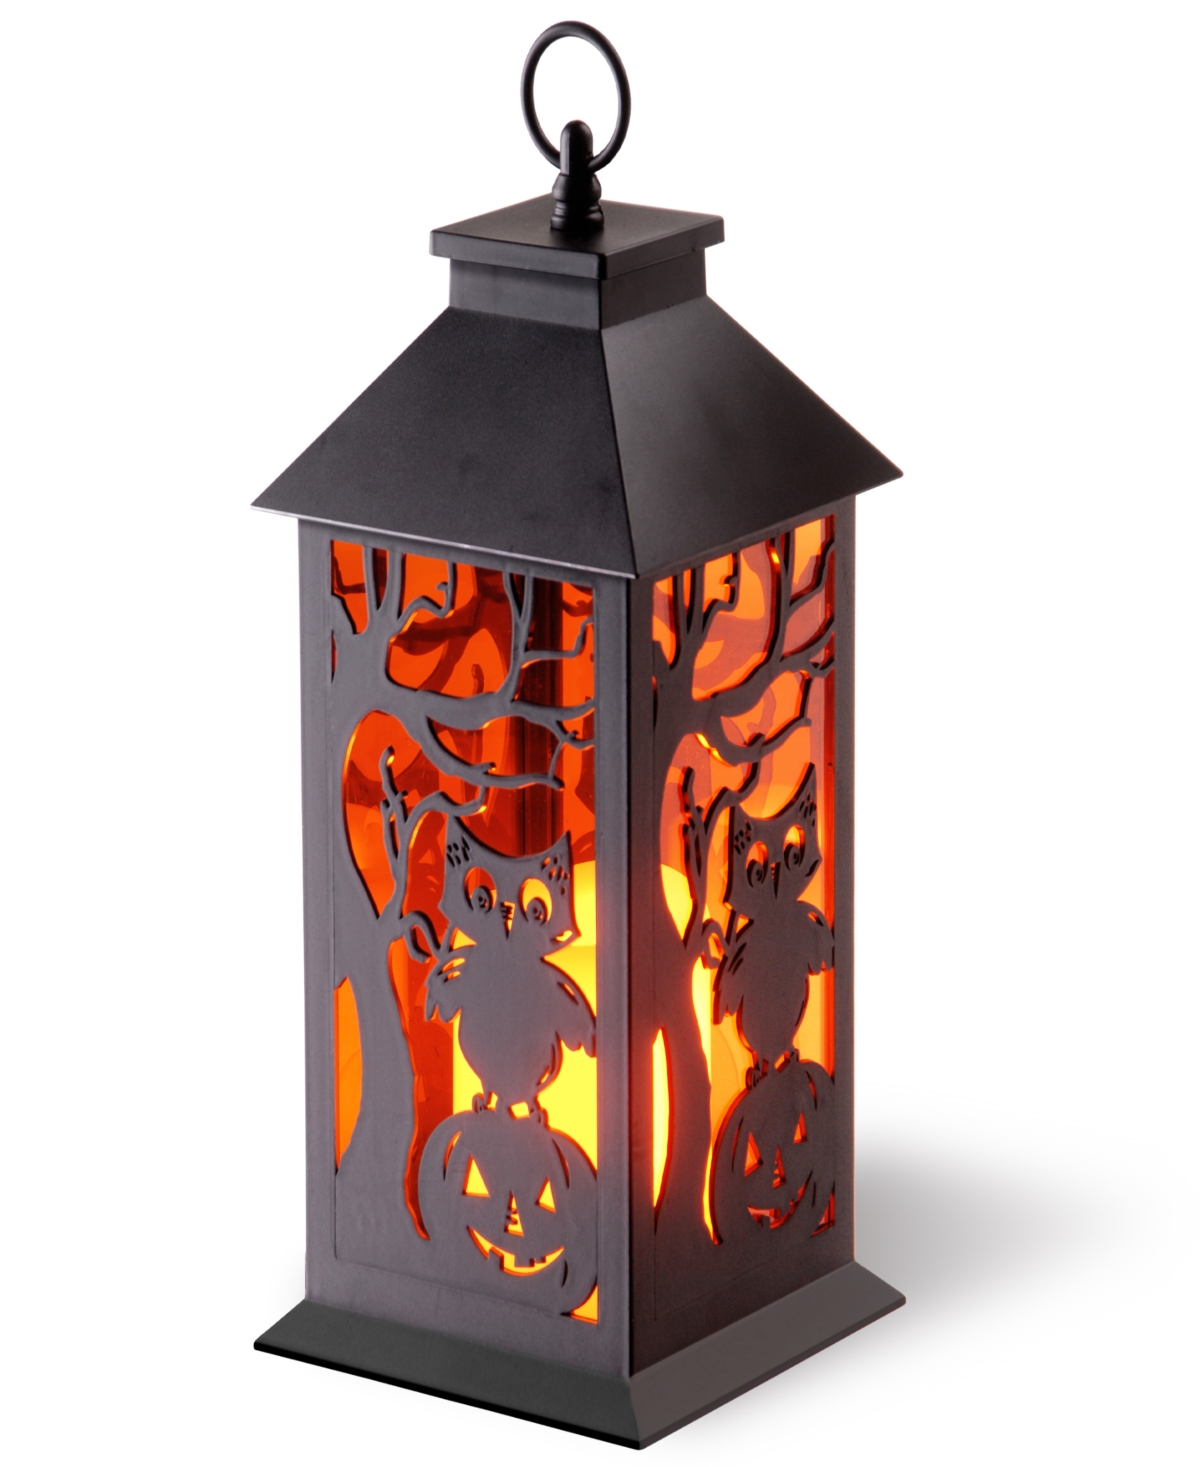 12" Halloween Lantern with Led Lights, Carved Images of Owls, Pumpkins, Leafless Trees - Black